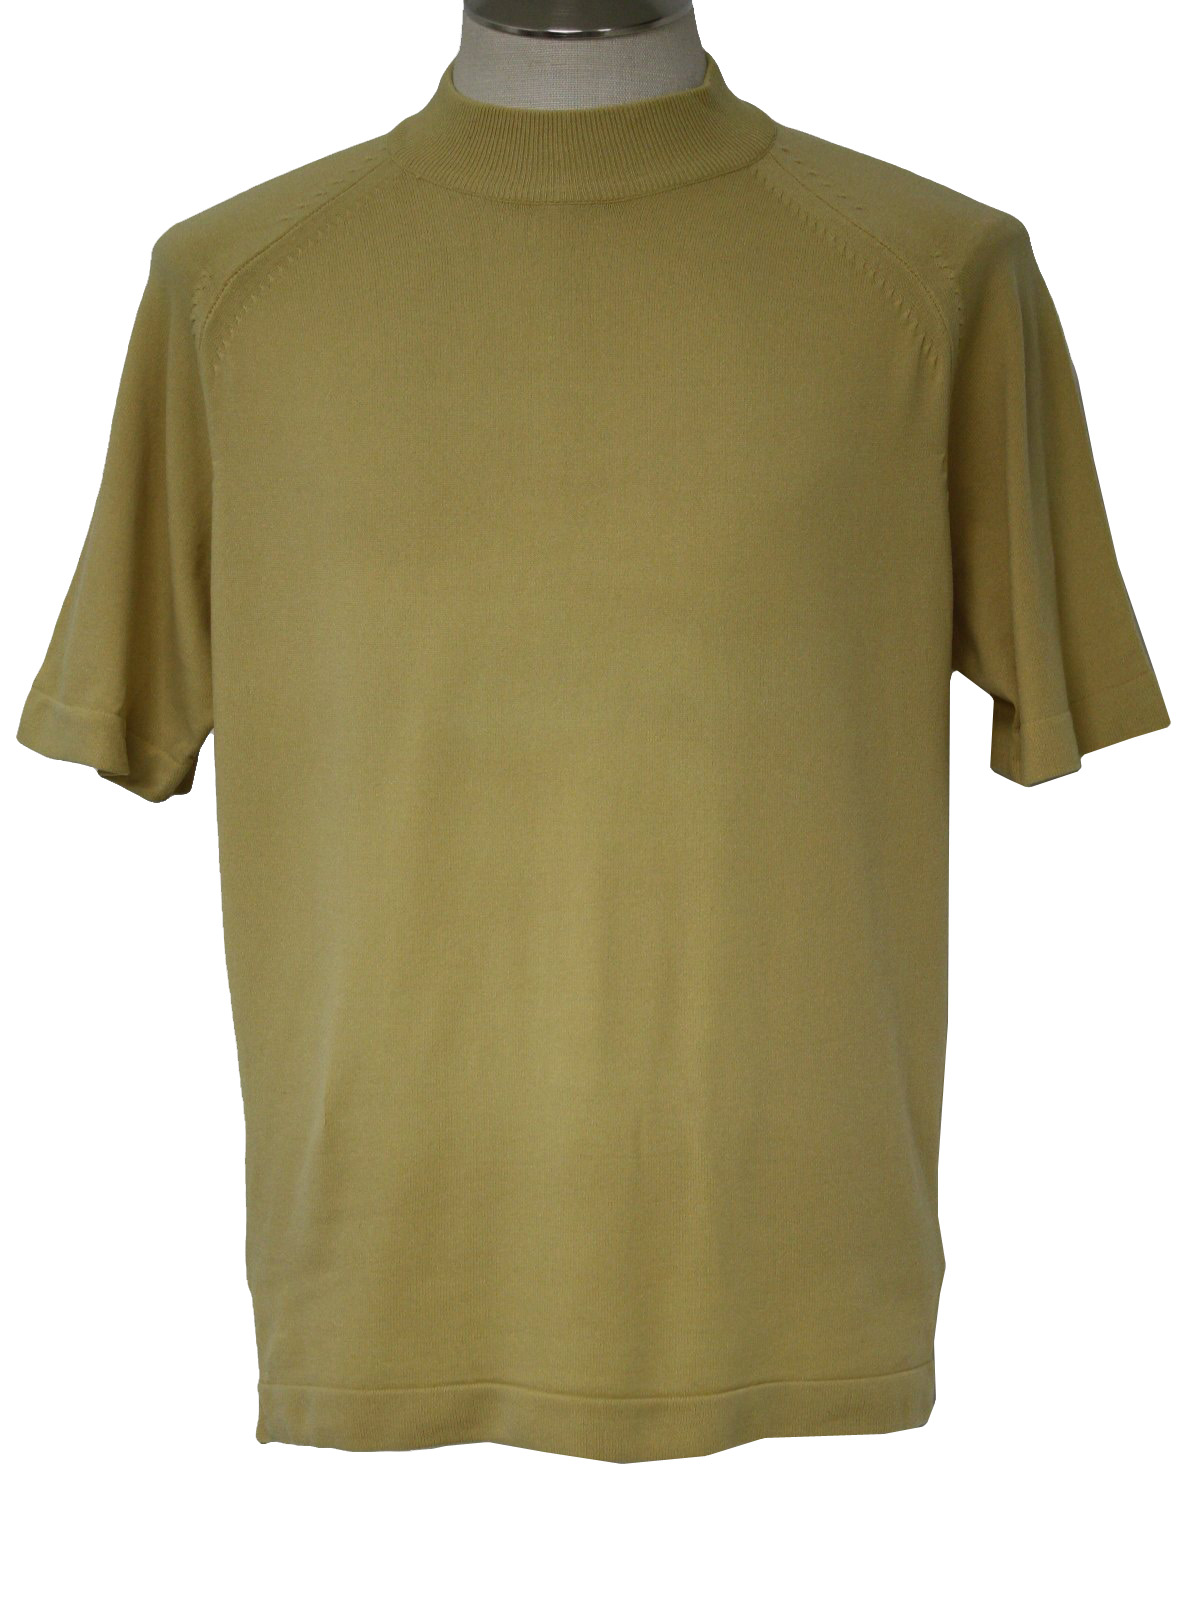 Download Vintage Trends 1960s Knit Shirt: 60s -Trends- Mens mustard ...